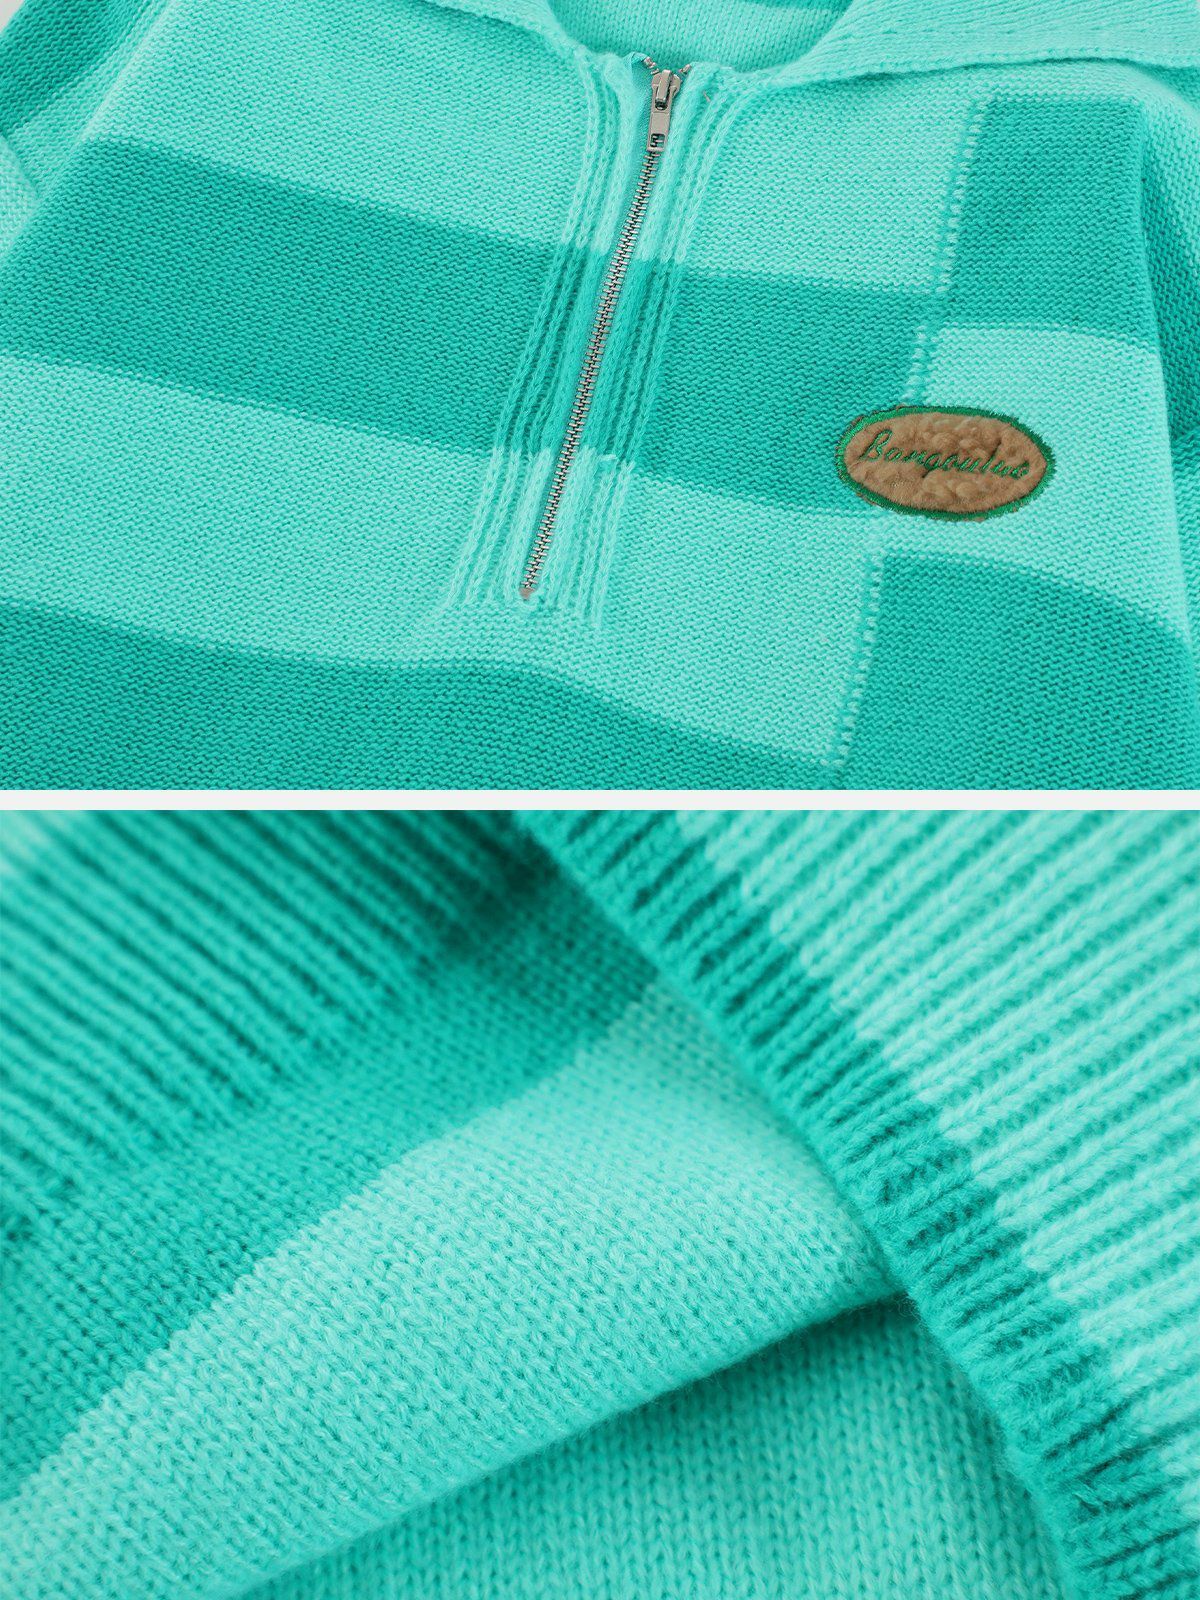 stylish stripes halfzip sweater urban & edgy knitwear 4125